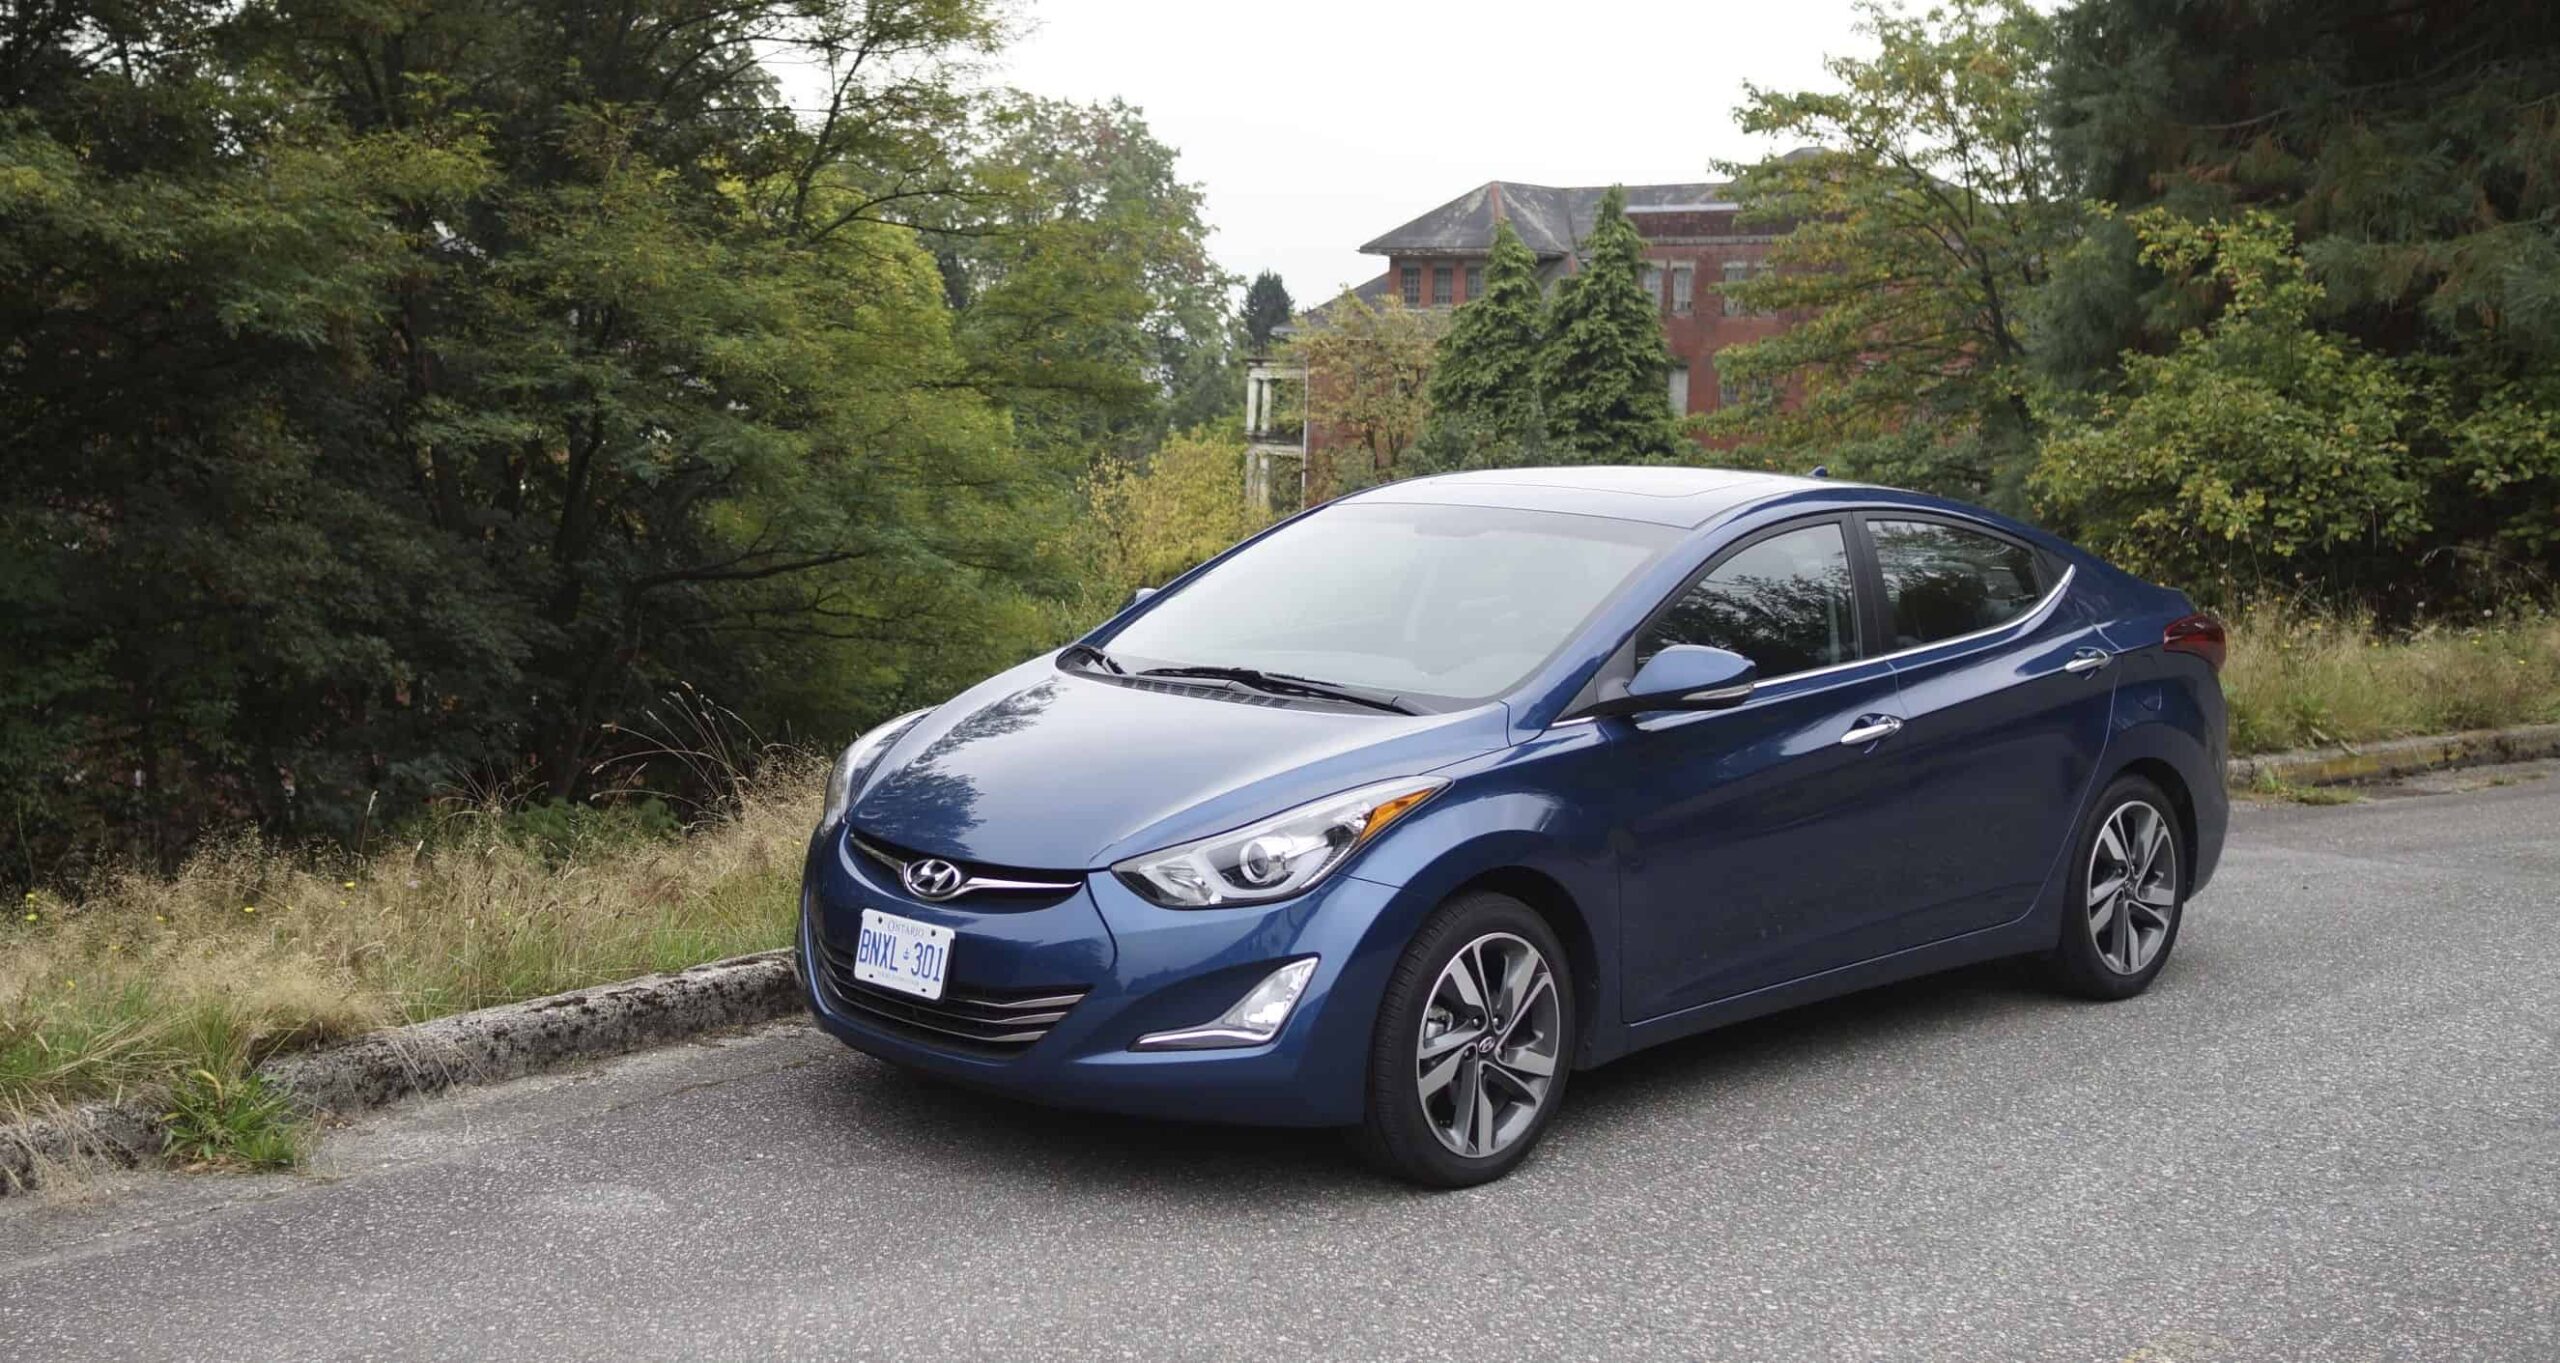 2015 Hyundai Elantra Limited Review scaled